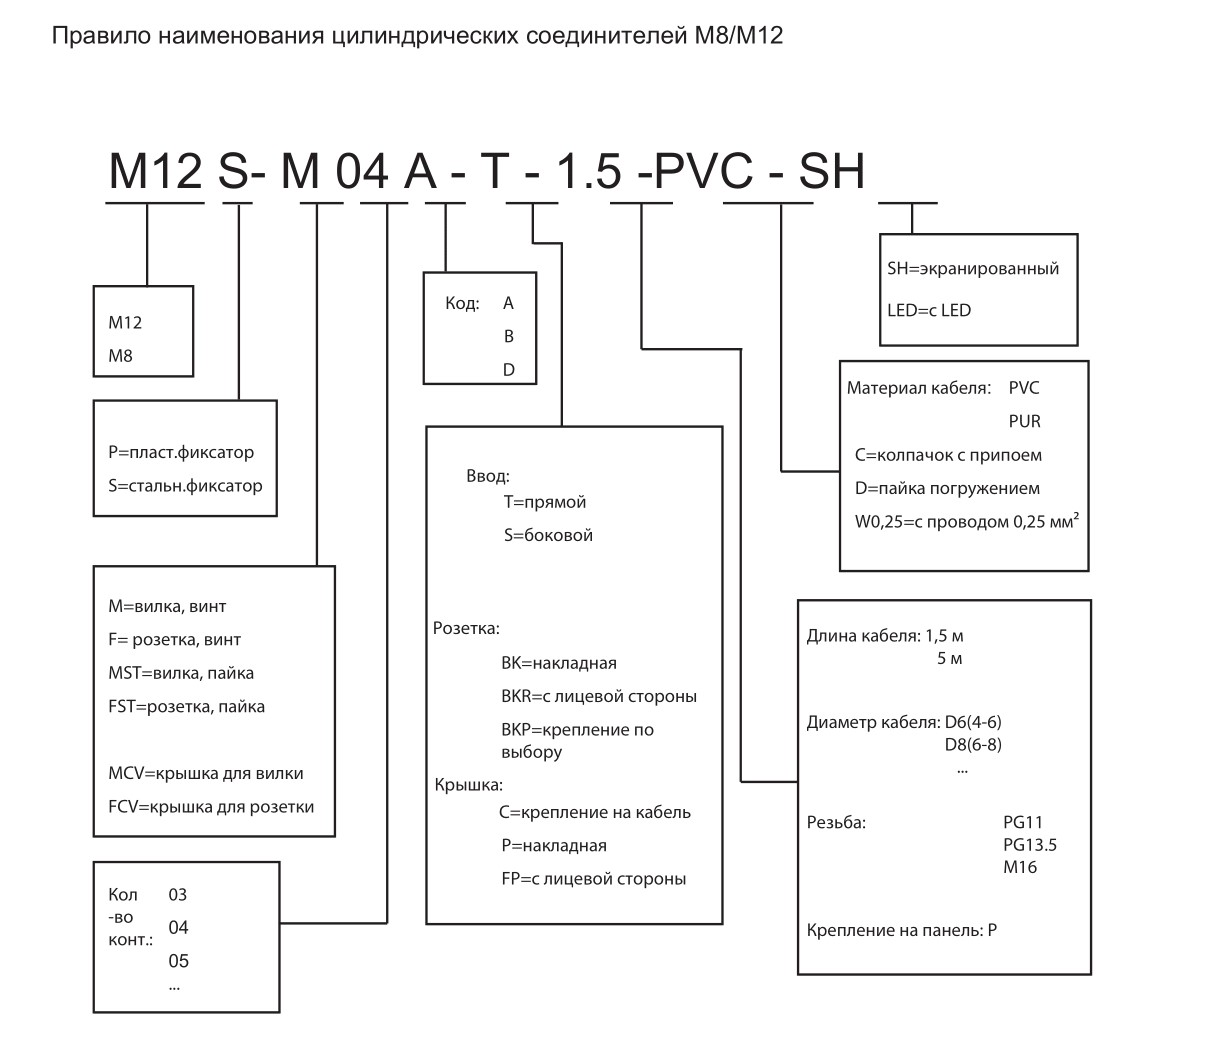 Цилиндрический соединитель-вилка/розетка (кабельная сборка) M12-M12A-T/F12A-S-1.5-PUR 1630124004003: Структура обозначения